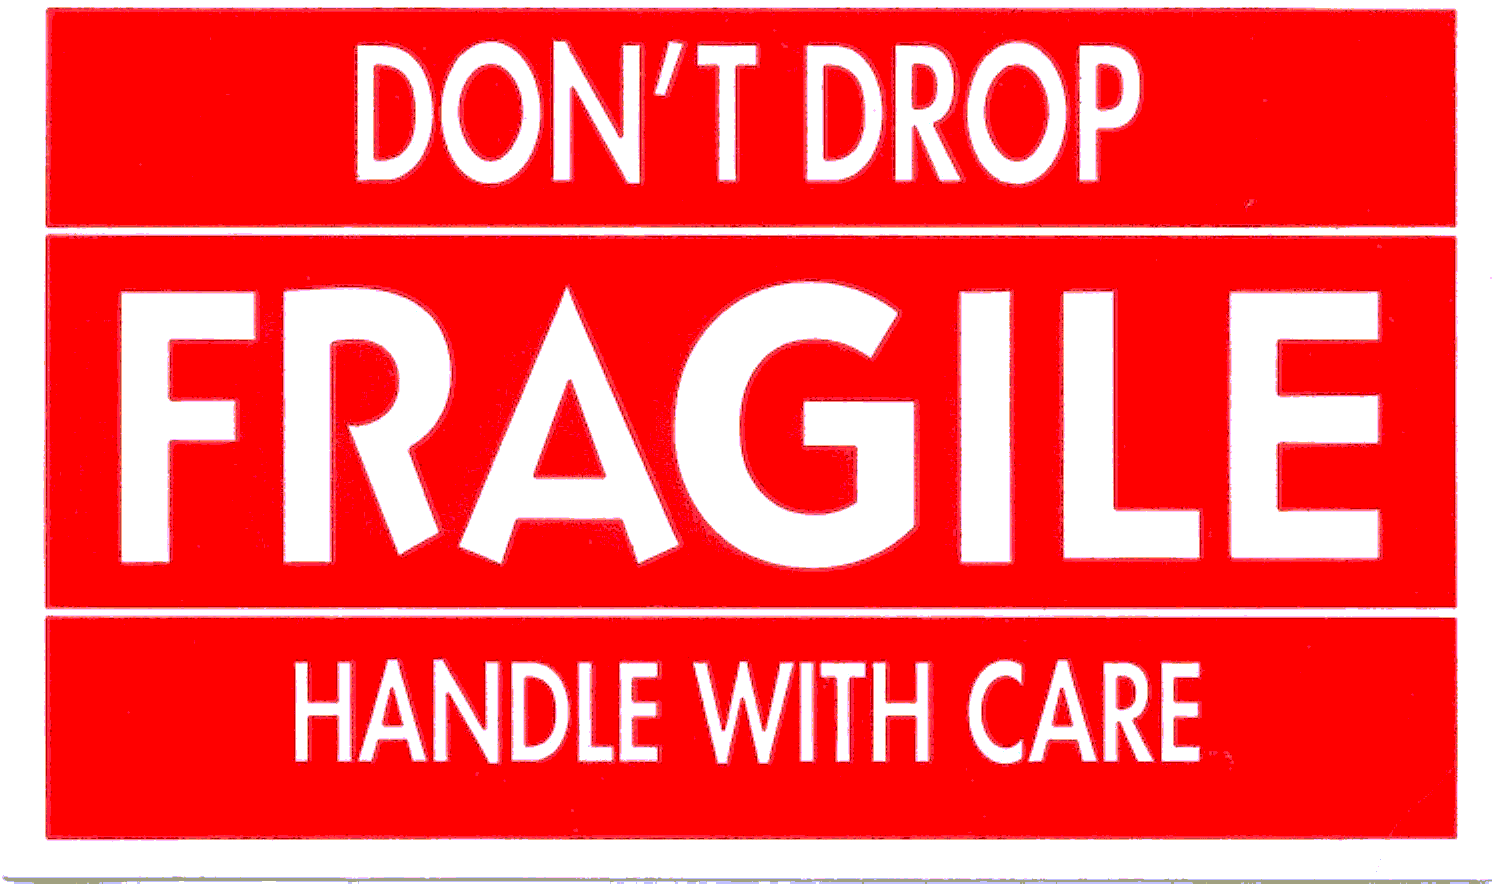 Fragile Gif images